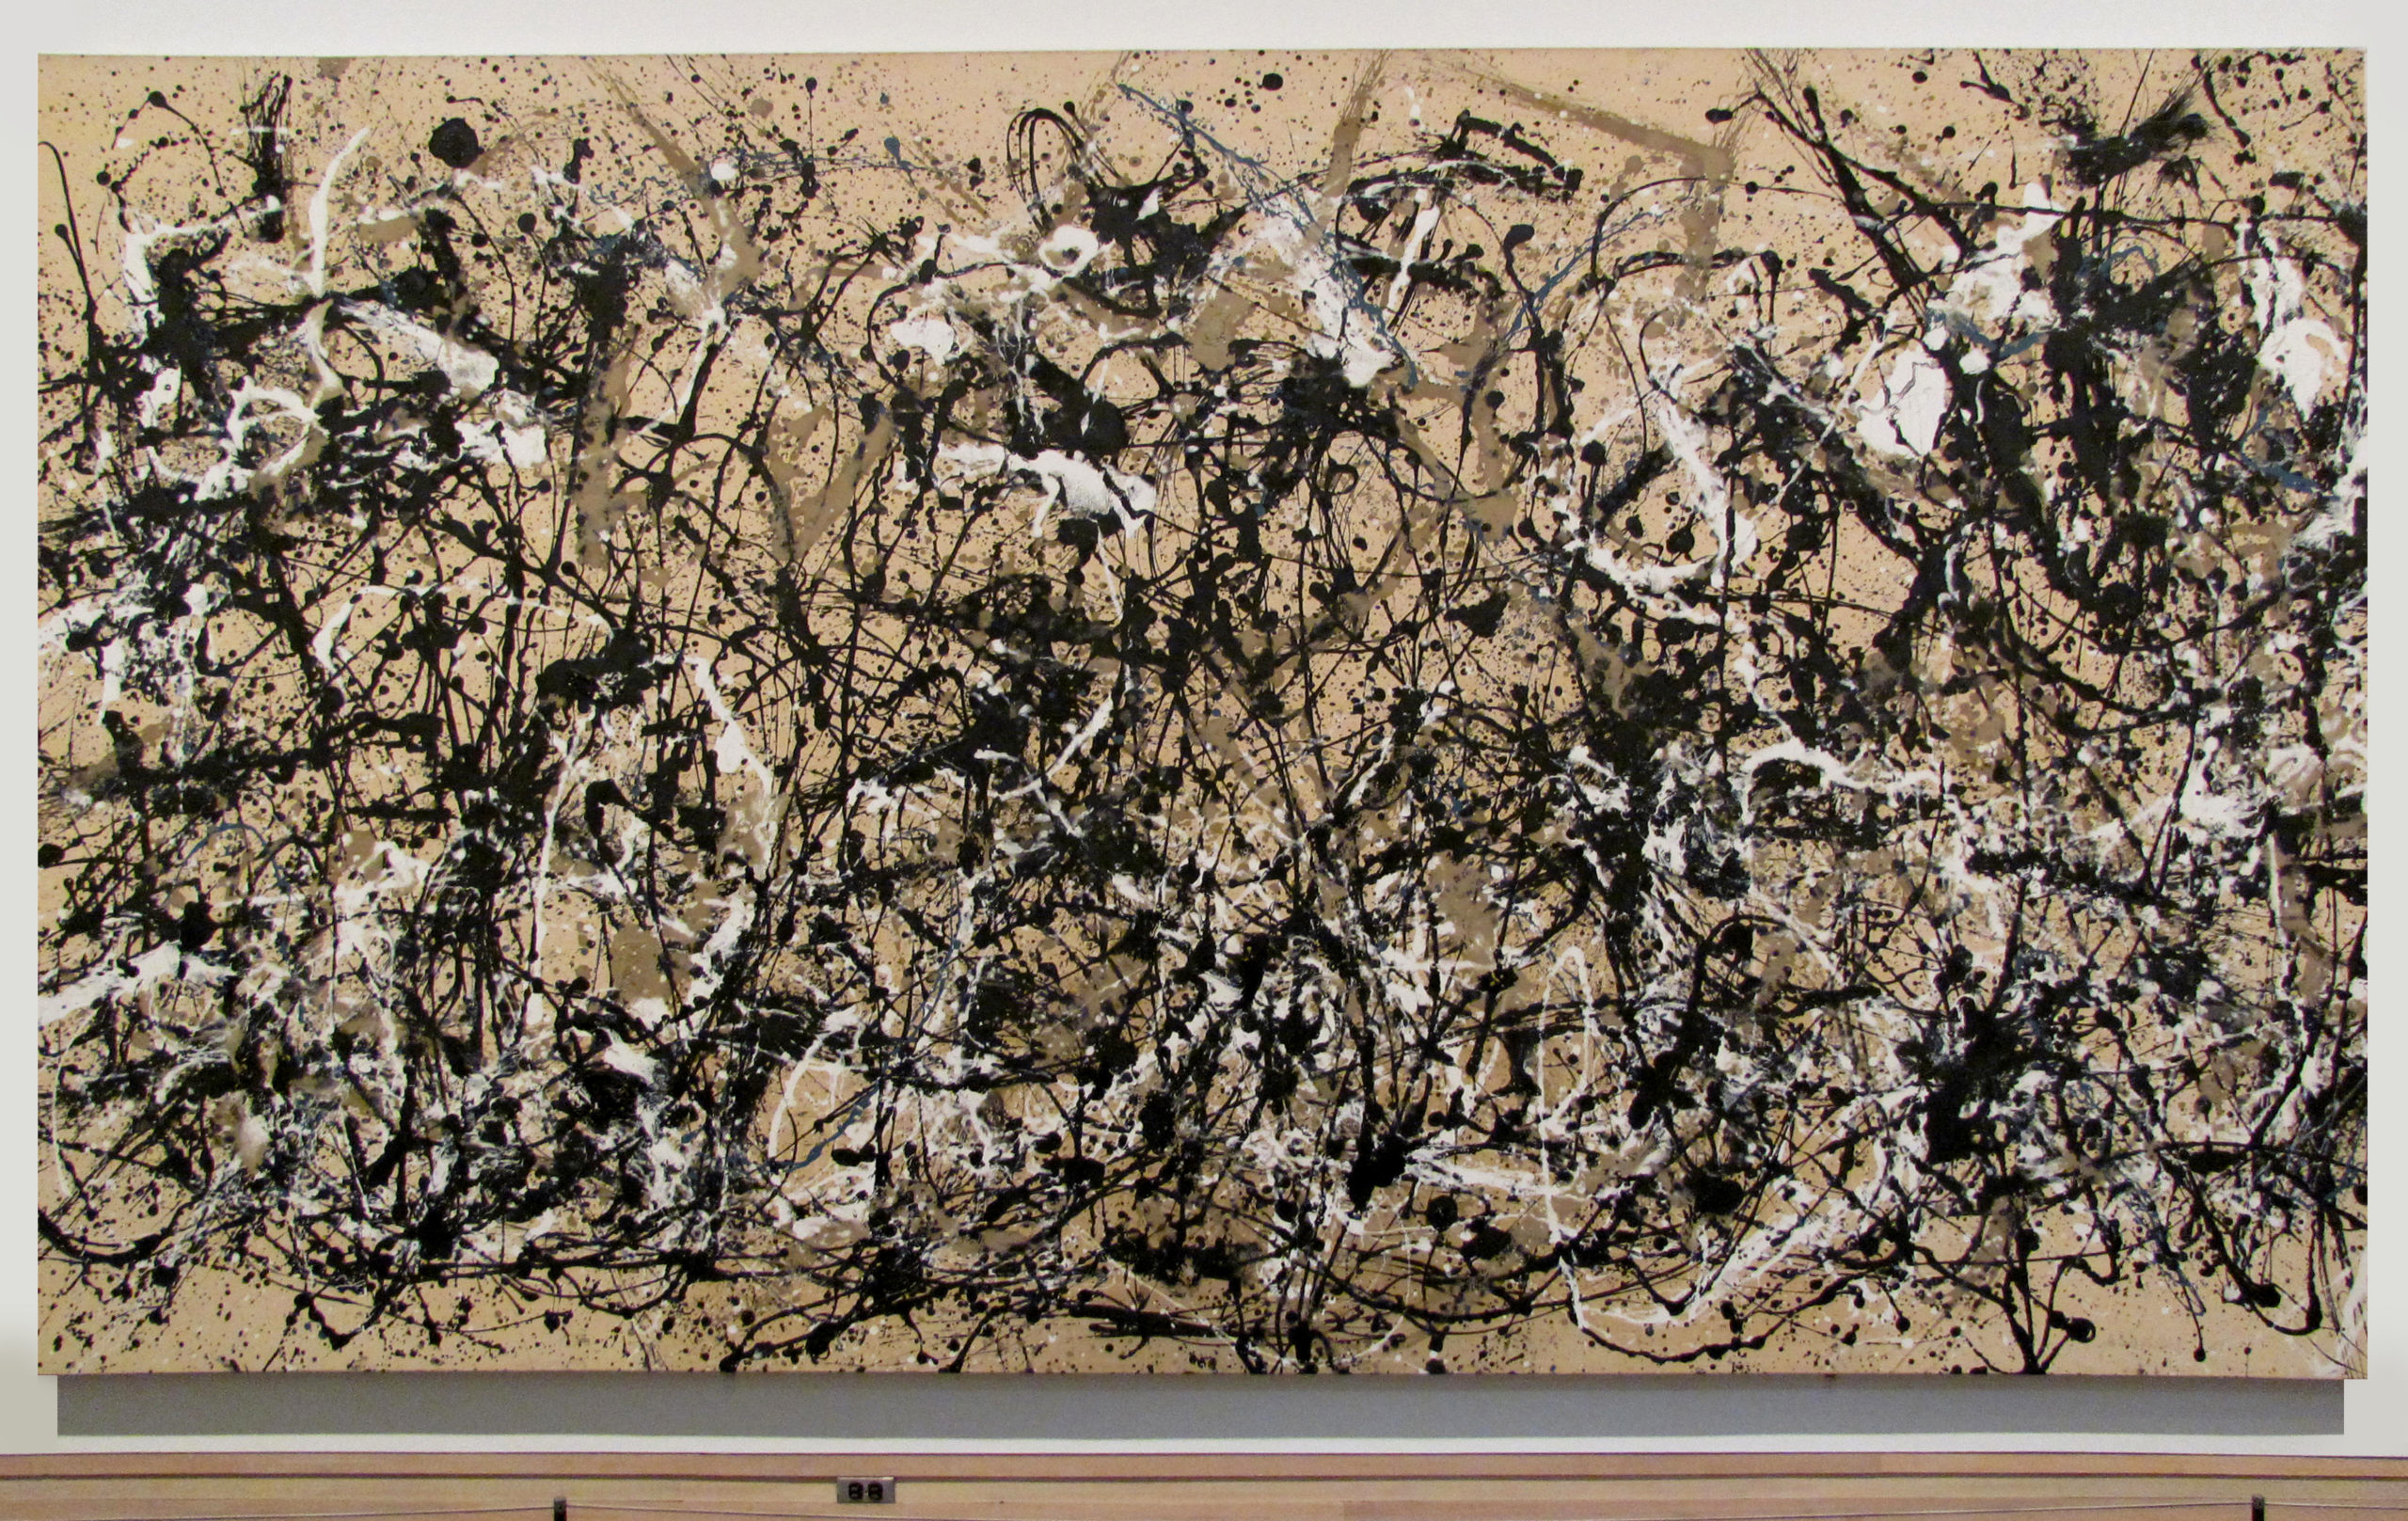 Jackson Pollock - Autumn Rhythm (Number 30), 1950, enamel on canvas, 266.7 x 525.8 cm (8 ft. 9 in. x 17 ft. 3 in.), installation view, Metropolitan Museum of Art, New York